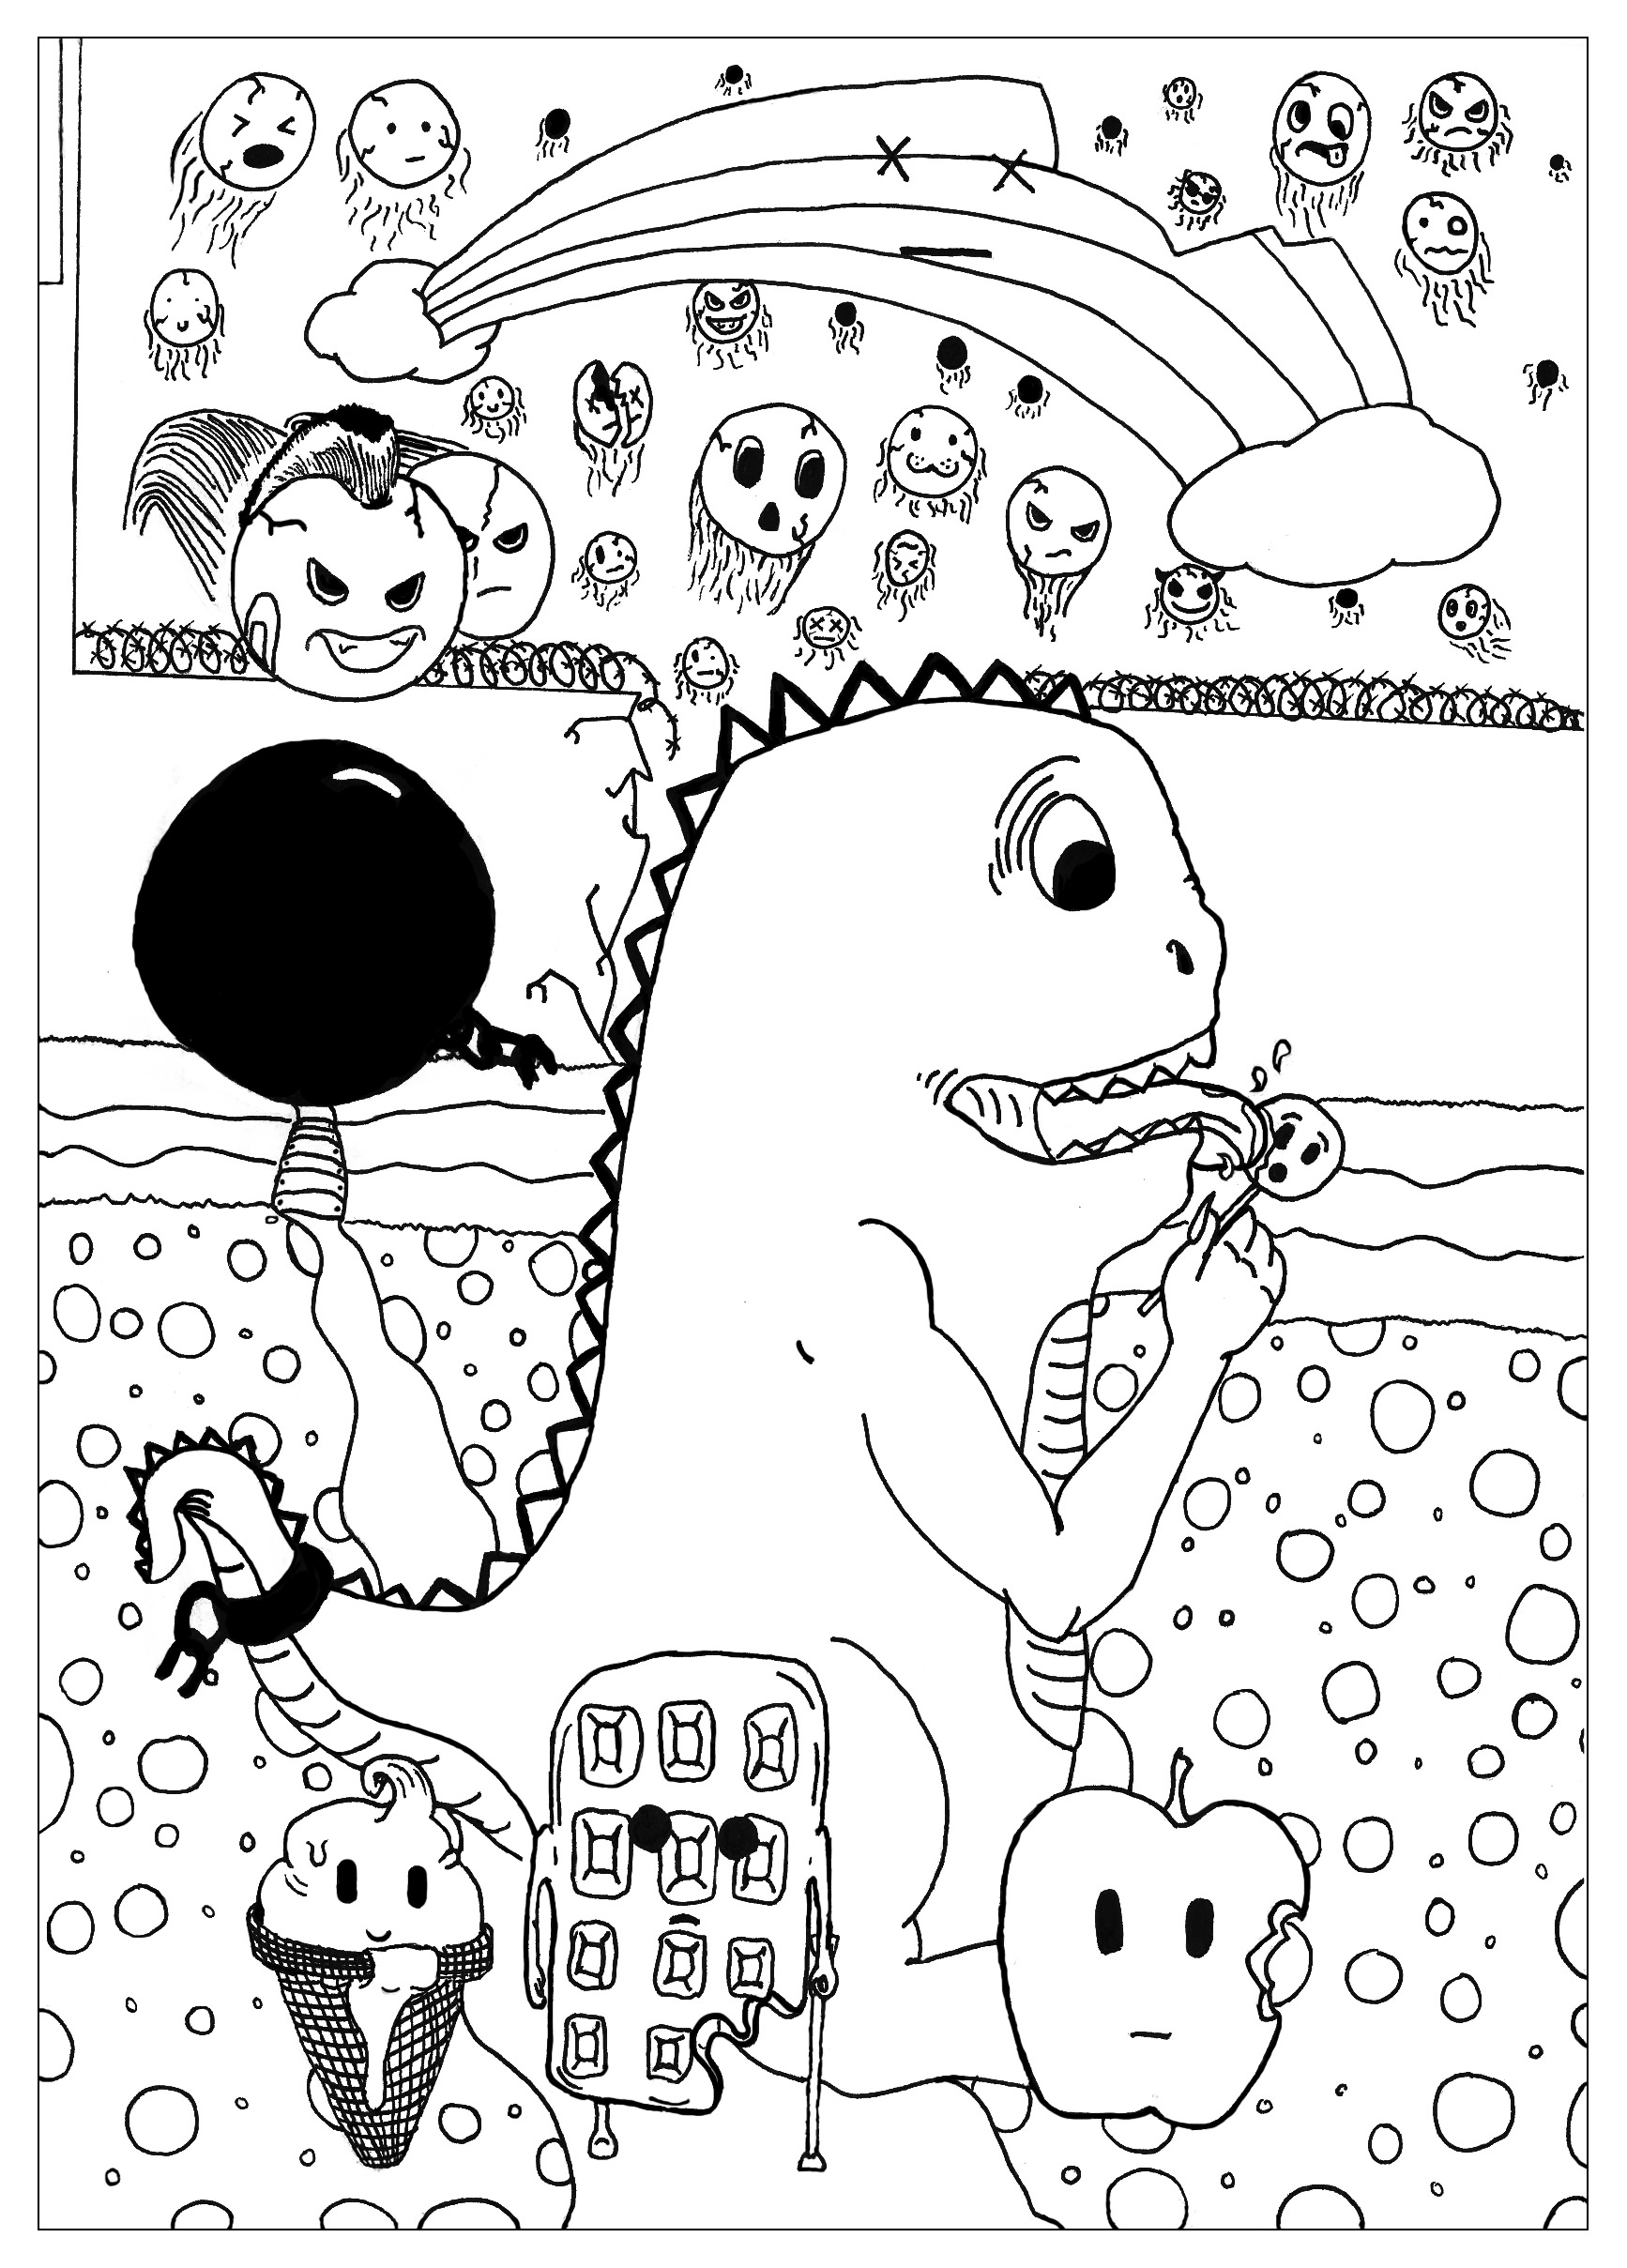 Disegni da colorare per adulti : Doodle art / Doodling - 31